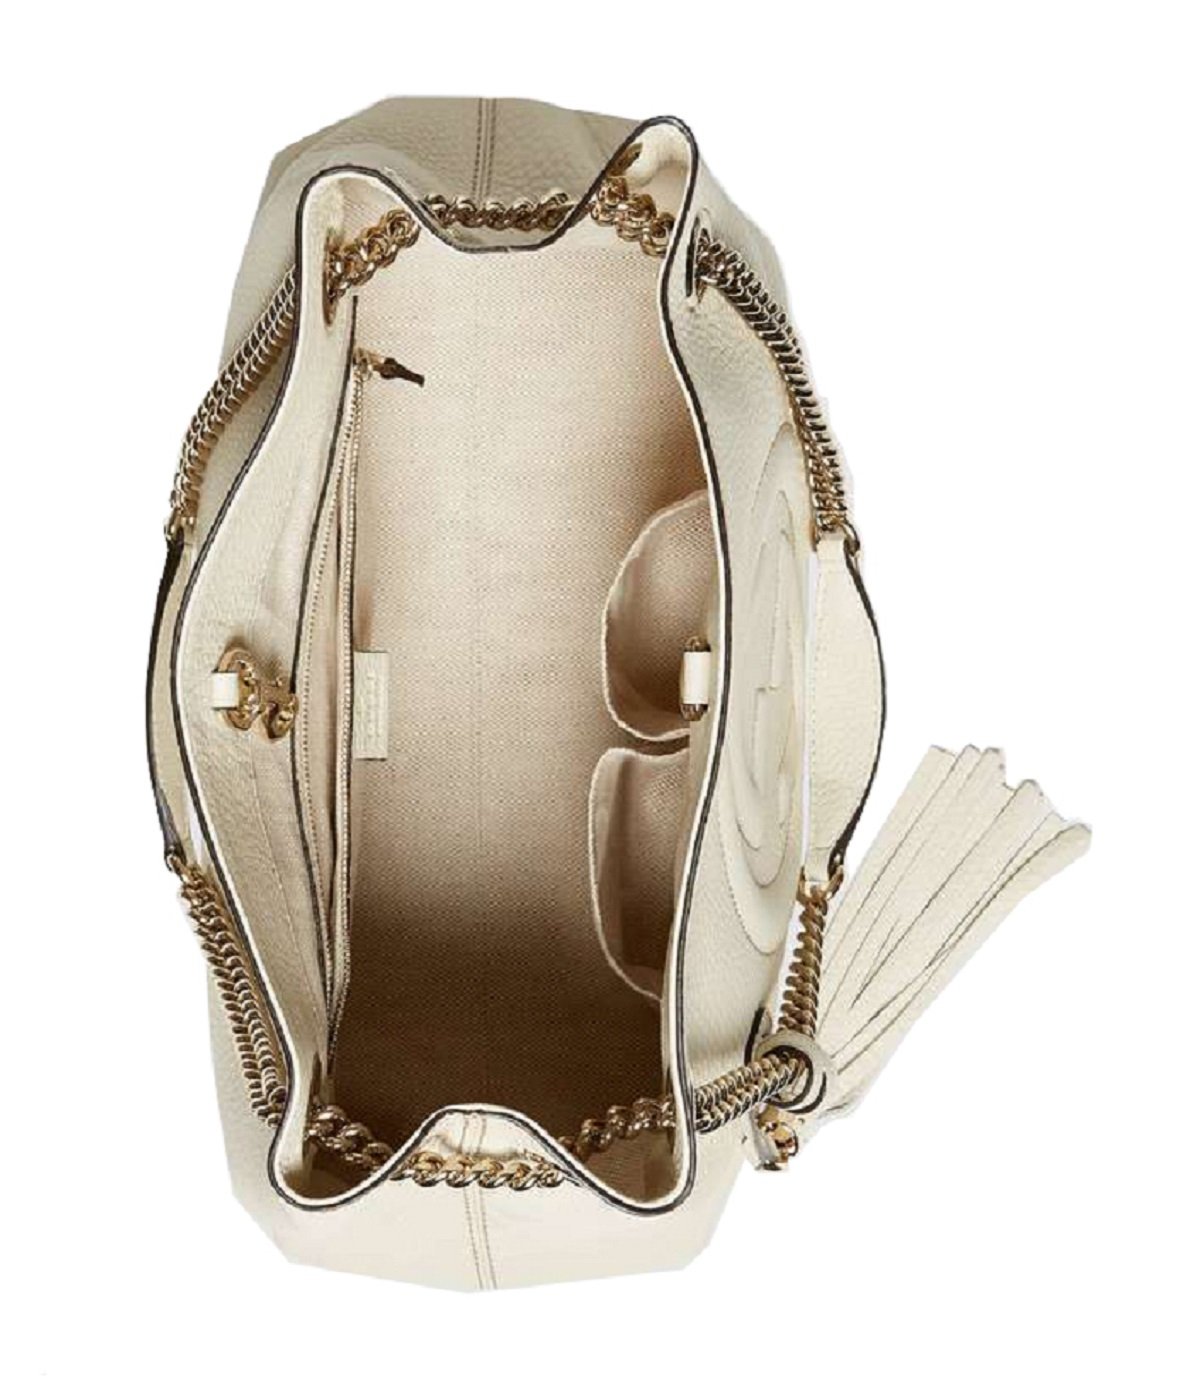 Gucci Soho GG Ivory Leather Chain Shoulder Tote Bag - LUXURYMRKT